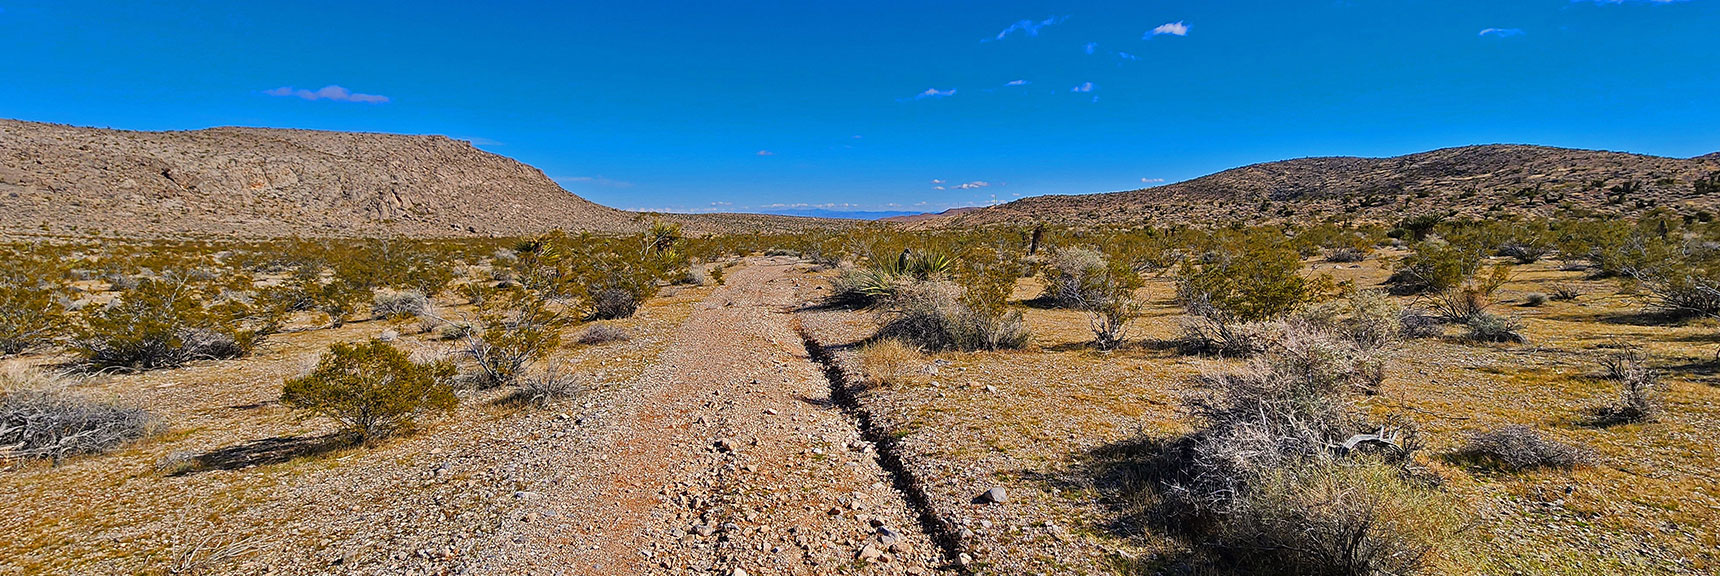 At Low Ridgeline Saddle Ahead, You'll Circle Peak 3844 Ridge to Right | Calico Basin Daily Workout Trails | Calico Basin, Nevada